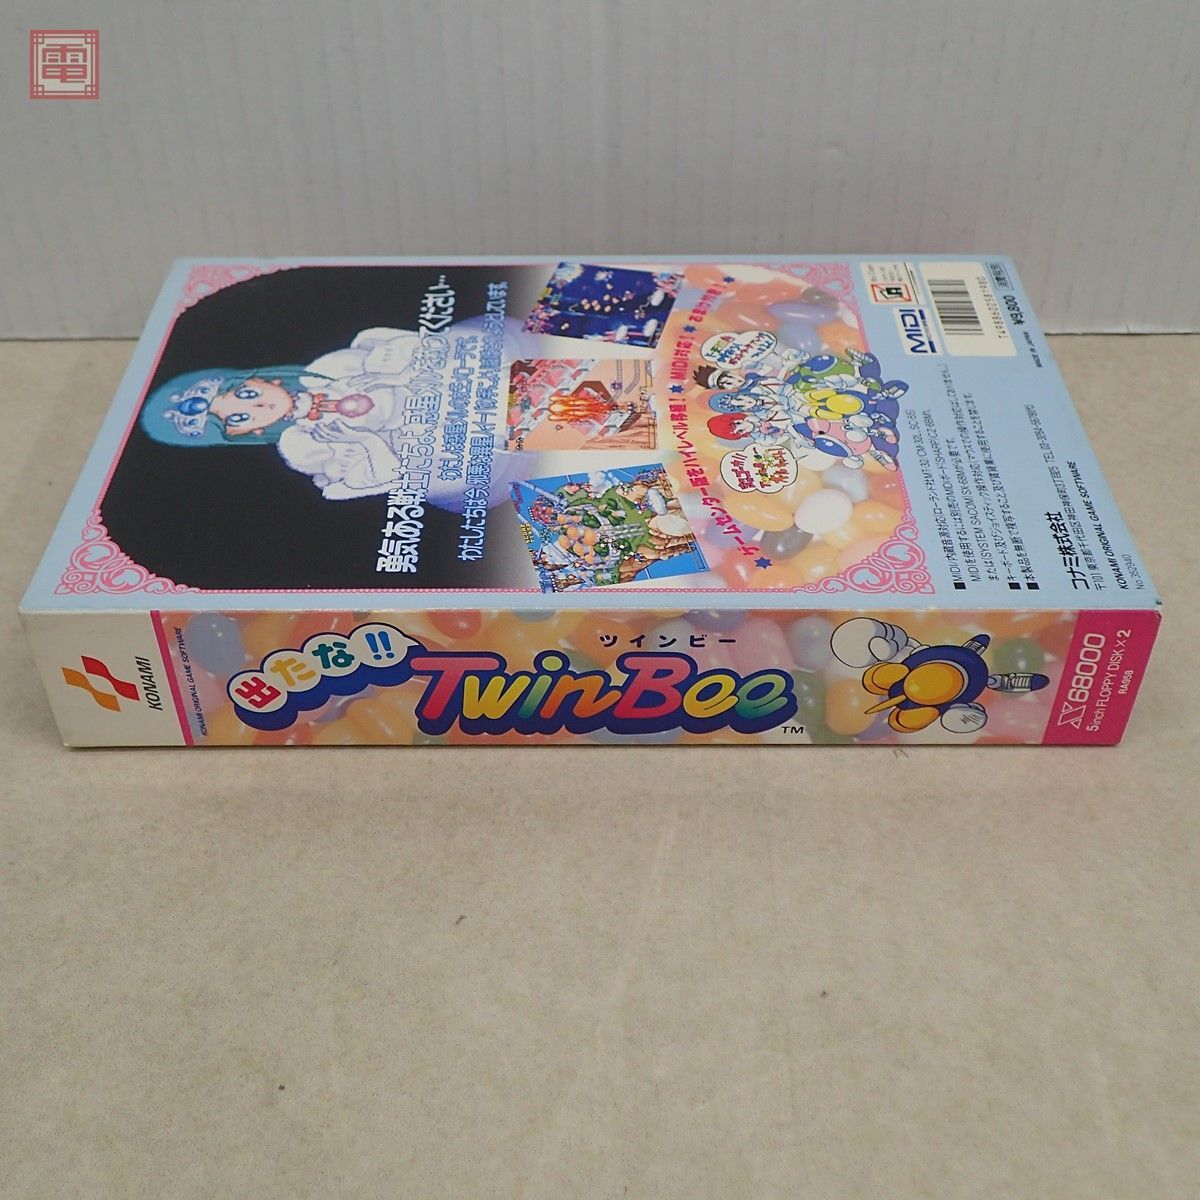 1 jpy ~ operation goods X68000 5 -inch FD came out .!!TwinBee twin Be Konami KONAMI box opinion * postcard attaching [20